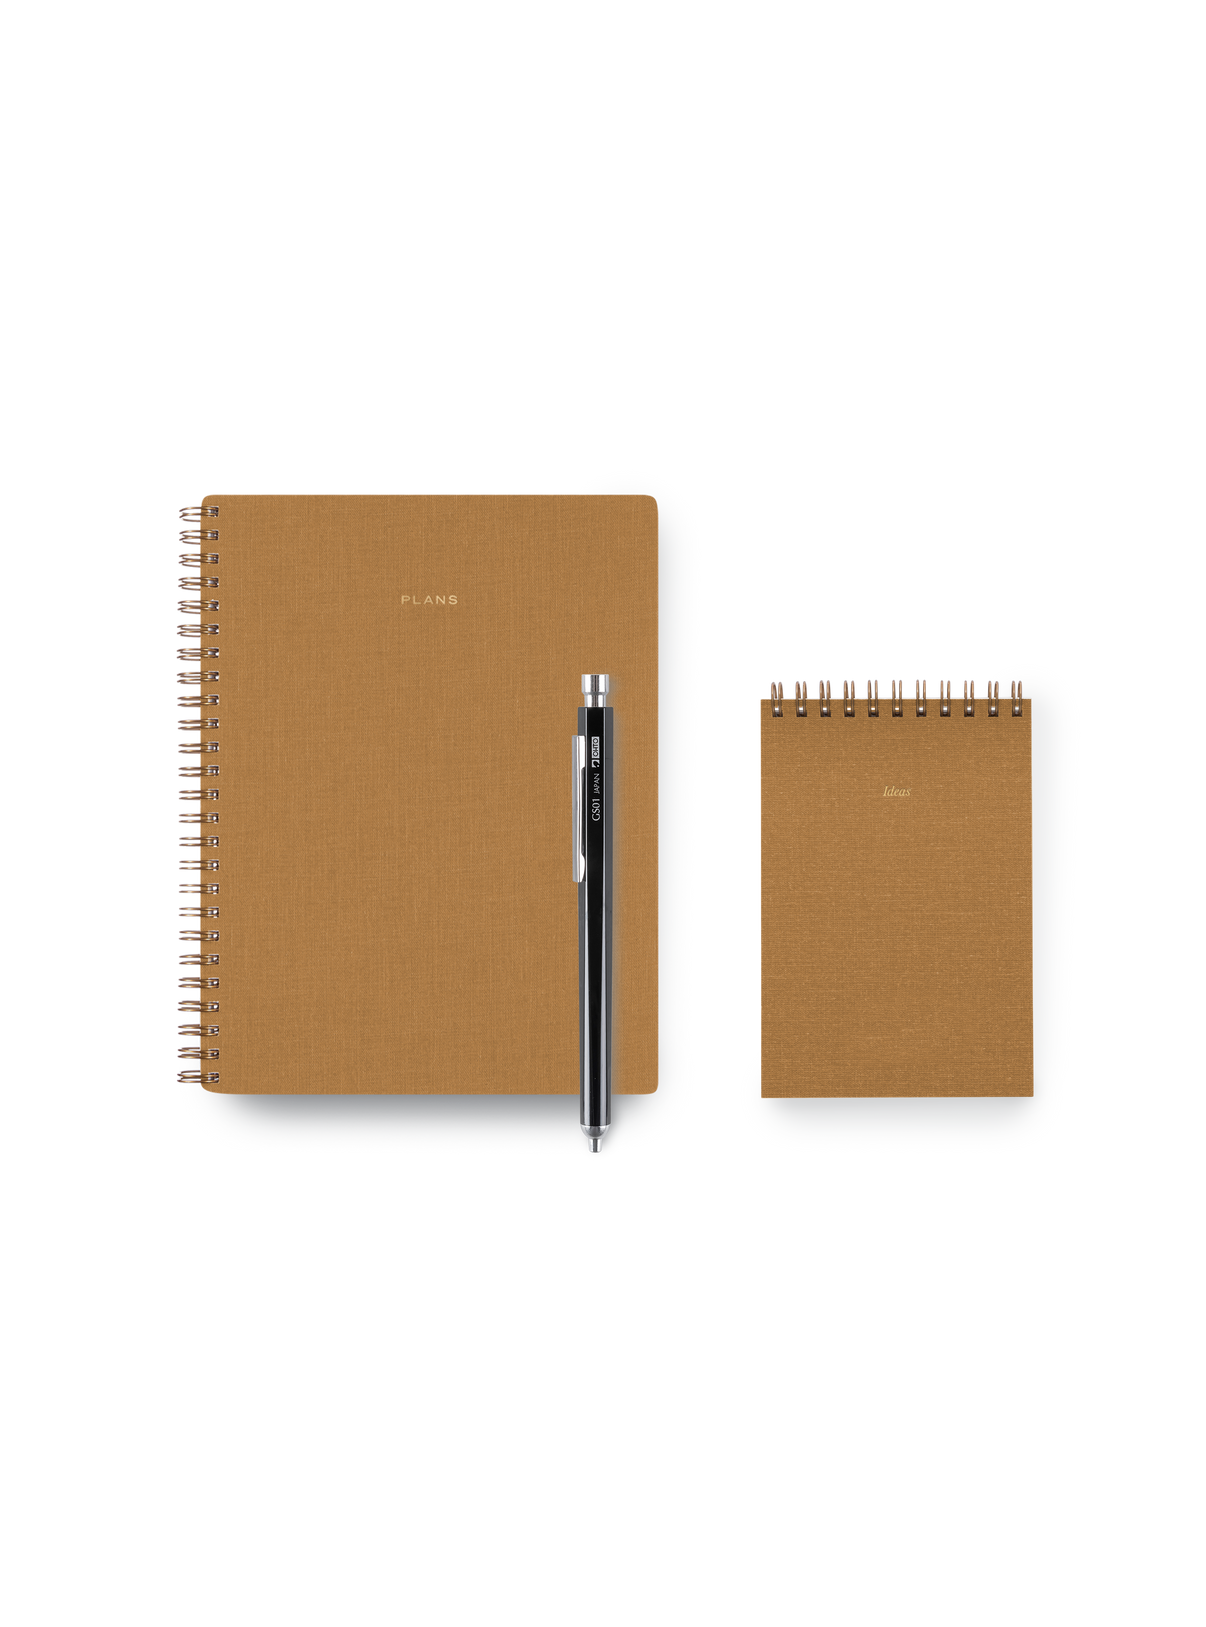 Entrepreneur set containing Plans Journal, Ideas Notepad, and Horizon Ballpoint Pen